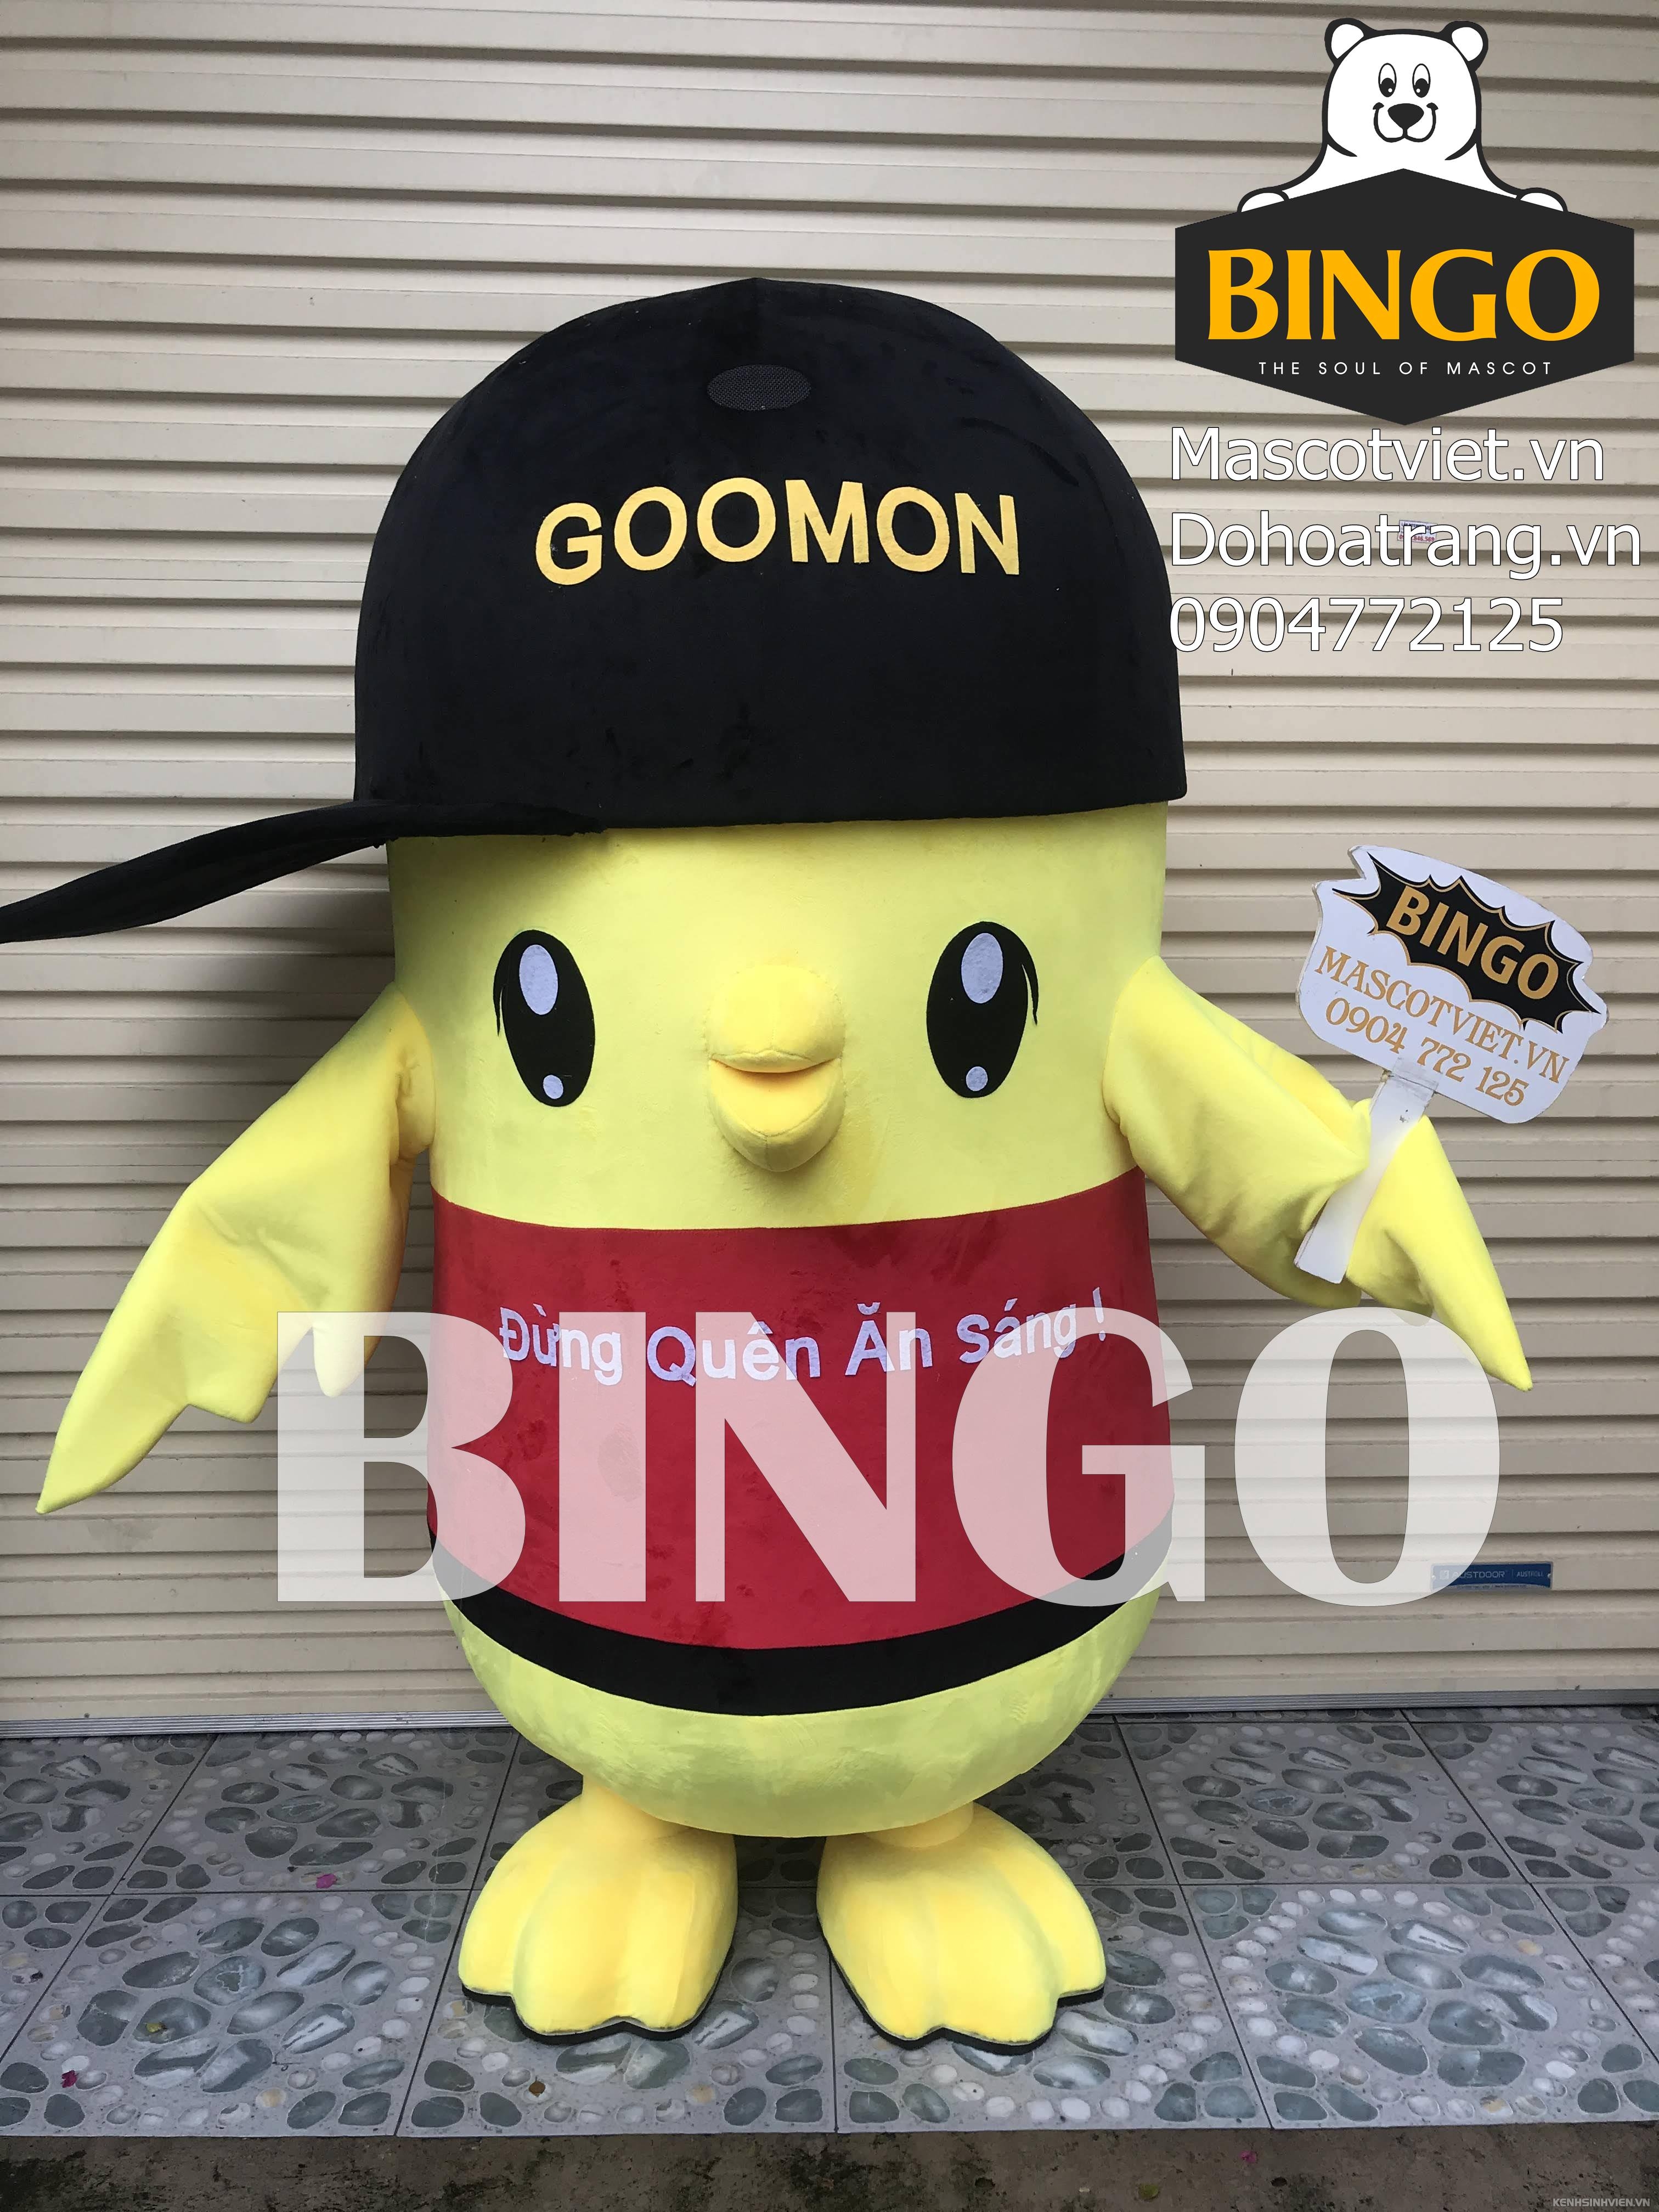 mascot-con-ga-total-bingo-costumes-0904772125.jpg